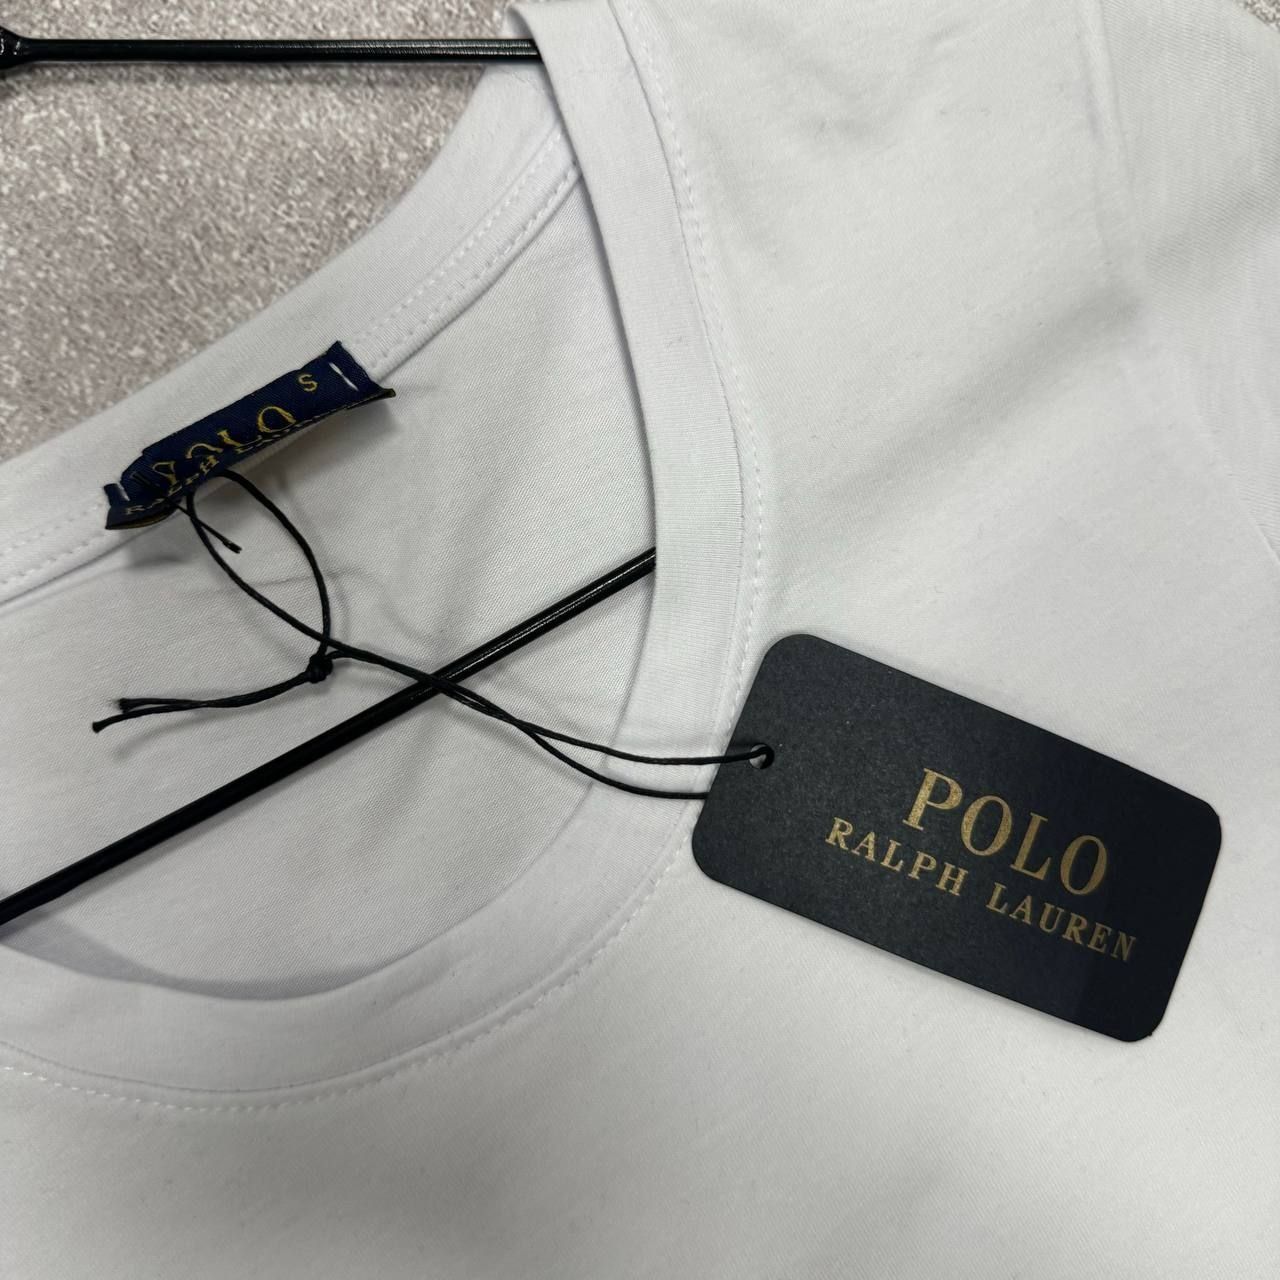 НОВЫЙ СЕЗОН ЕКСКЛЮЗИВ футболка от Polo Ralph Lauren - лето 2024